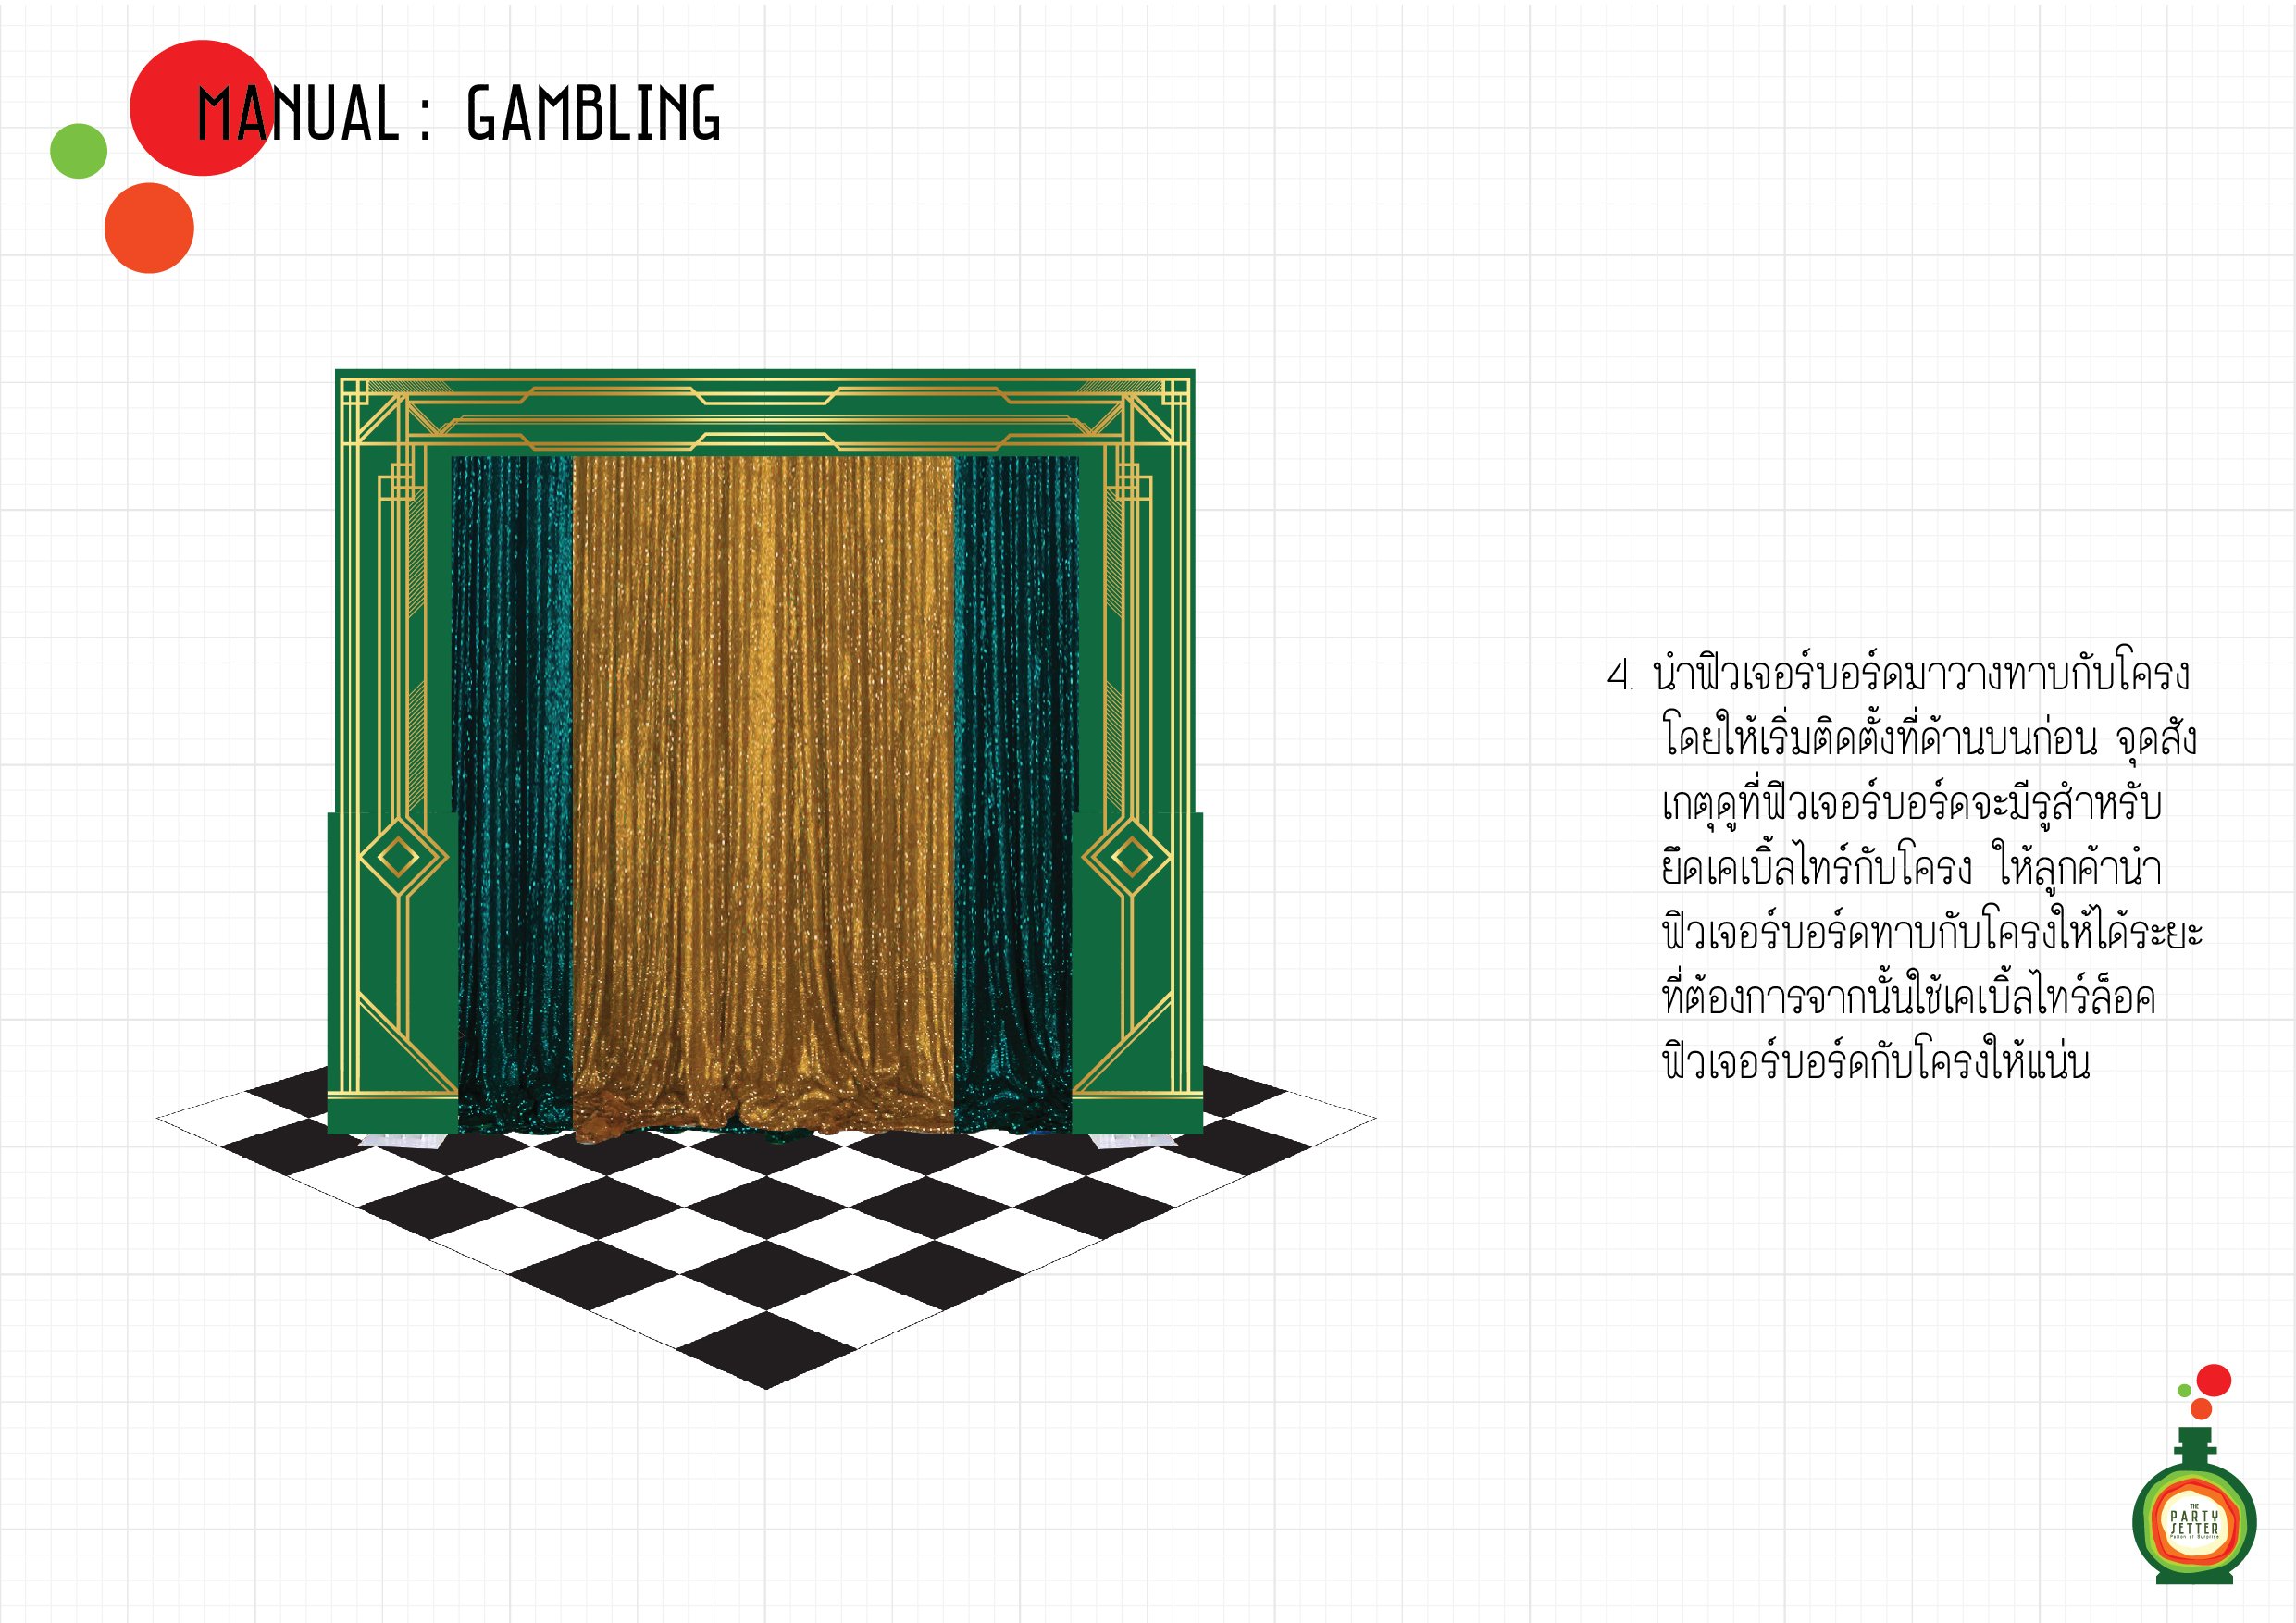 Manual_Gambling-04-01.jpg